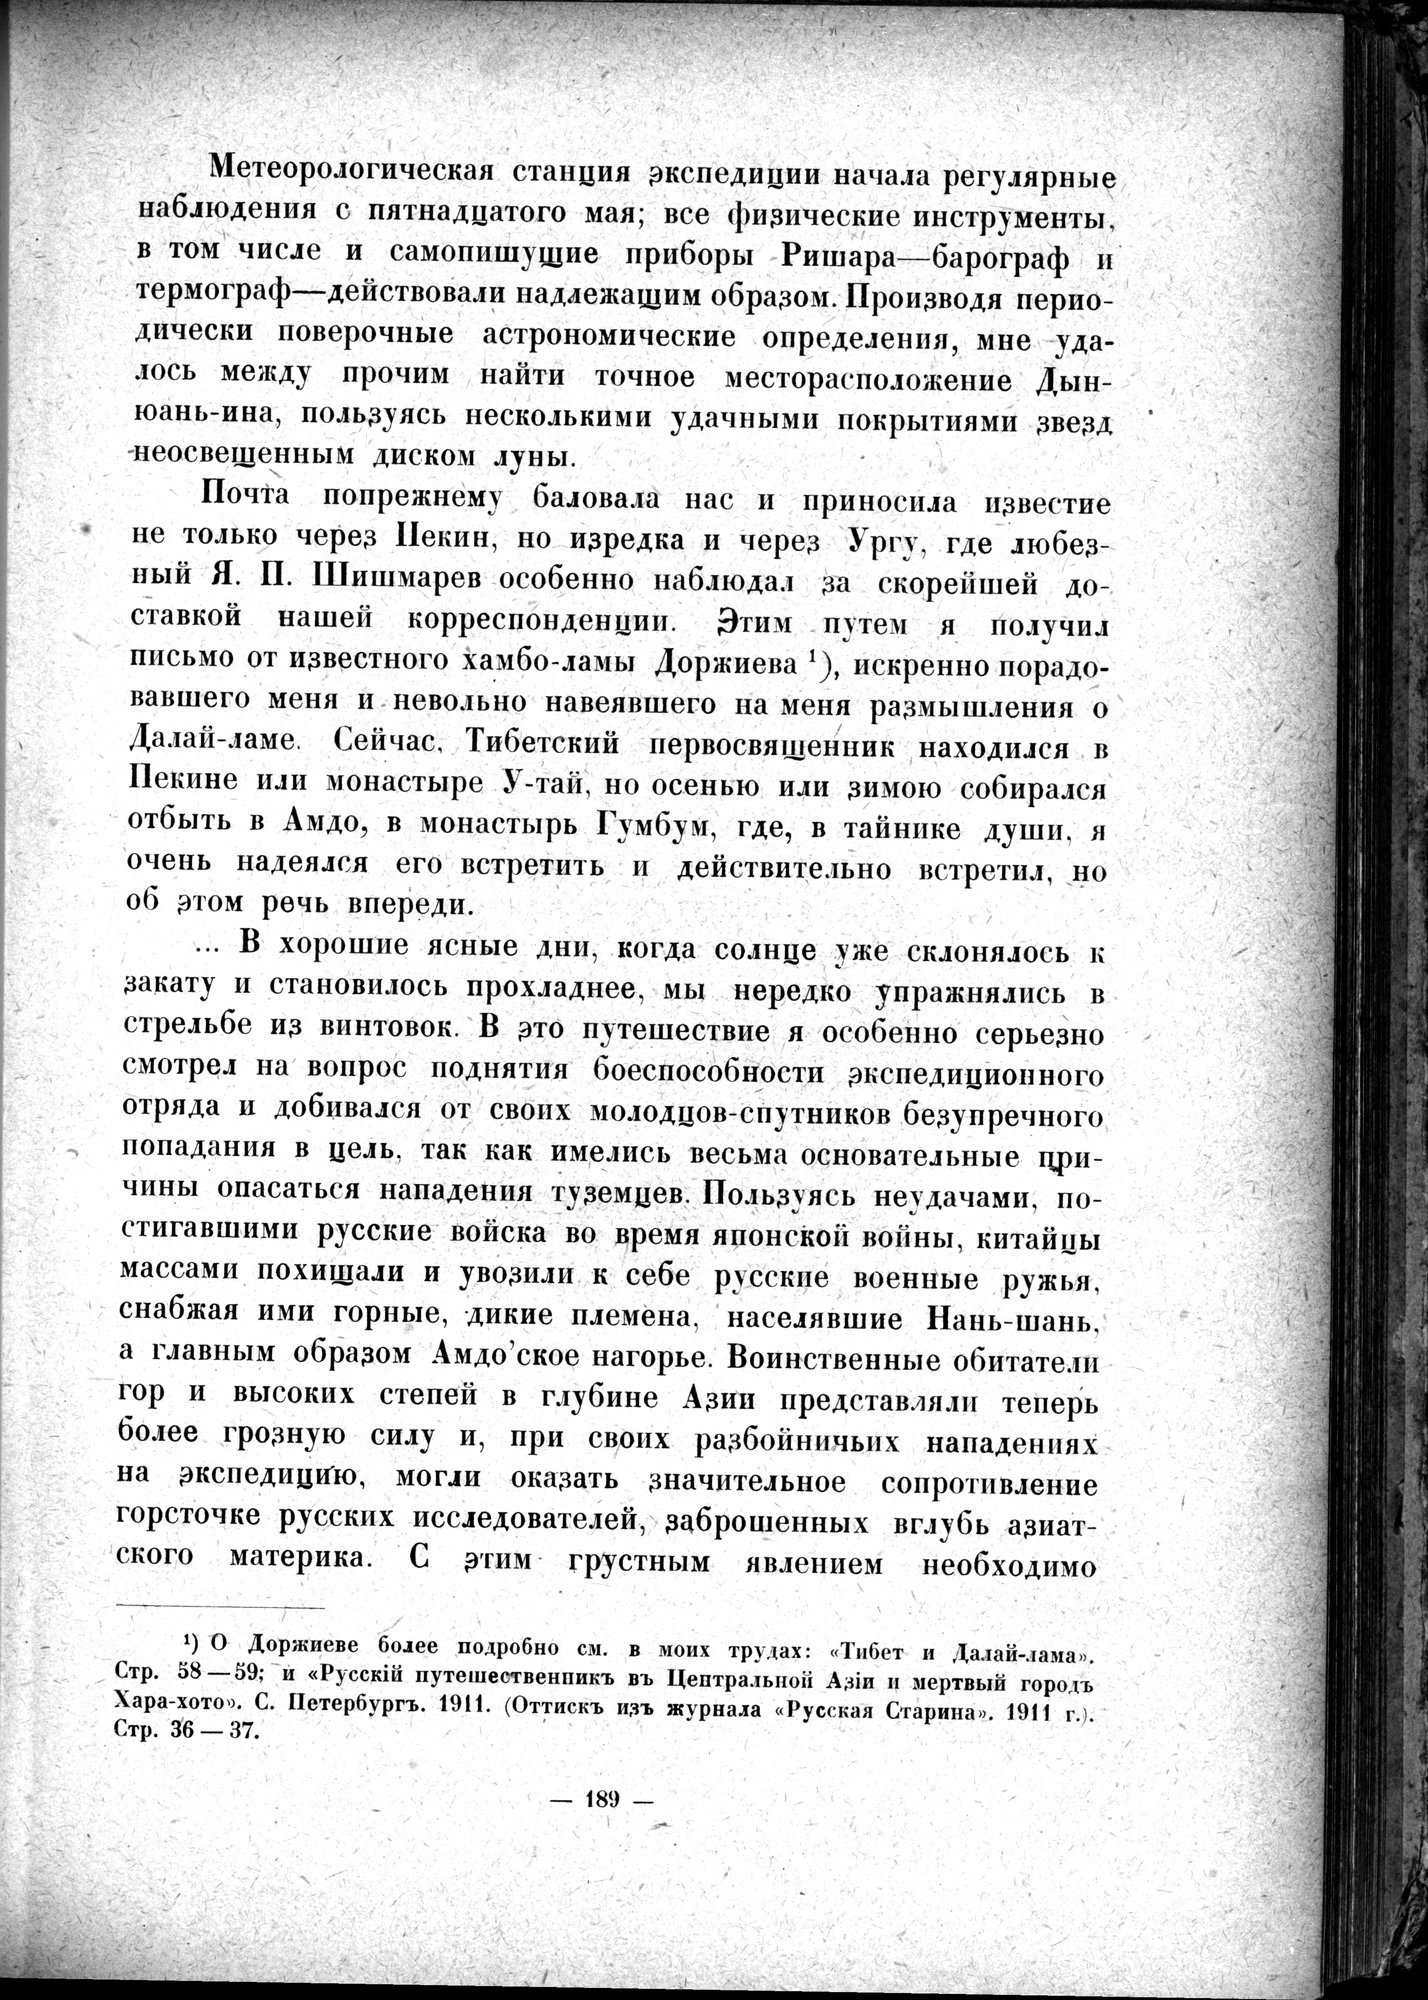 Mongoliya i Amdo i mertby gorod Khara-Khoto : vol.1 / Page 227 (Grayscale High Resolution Image)